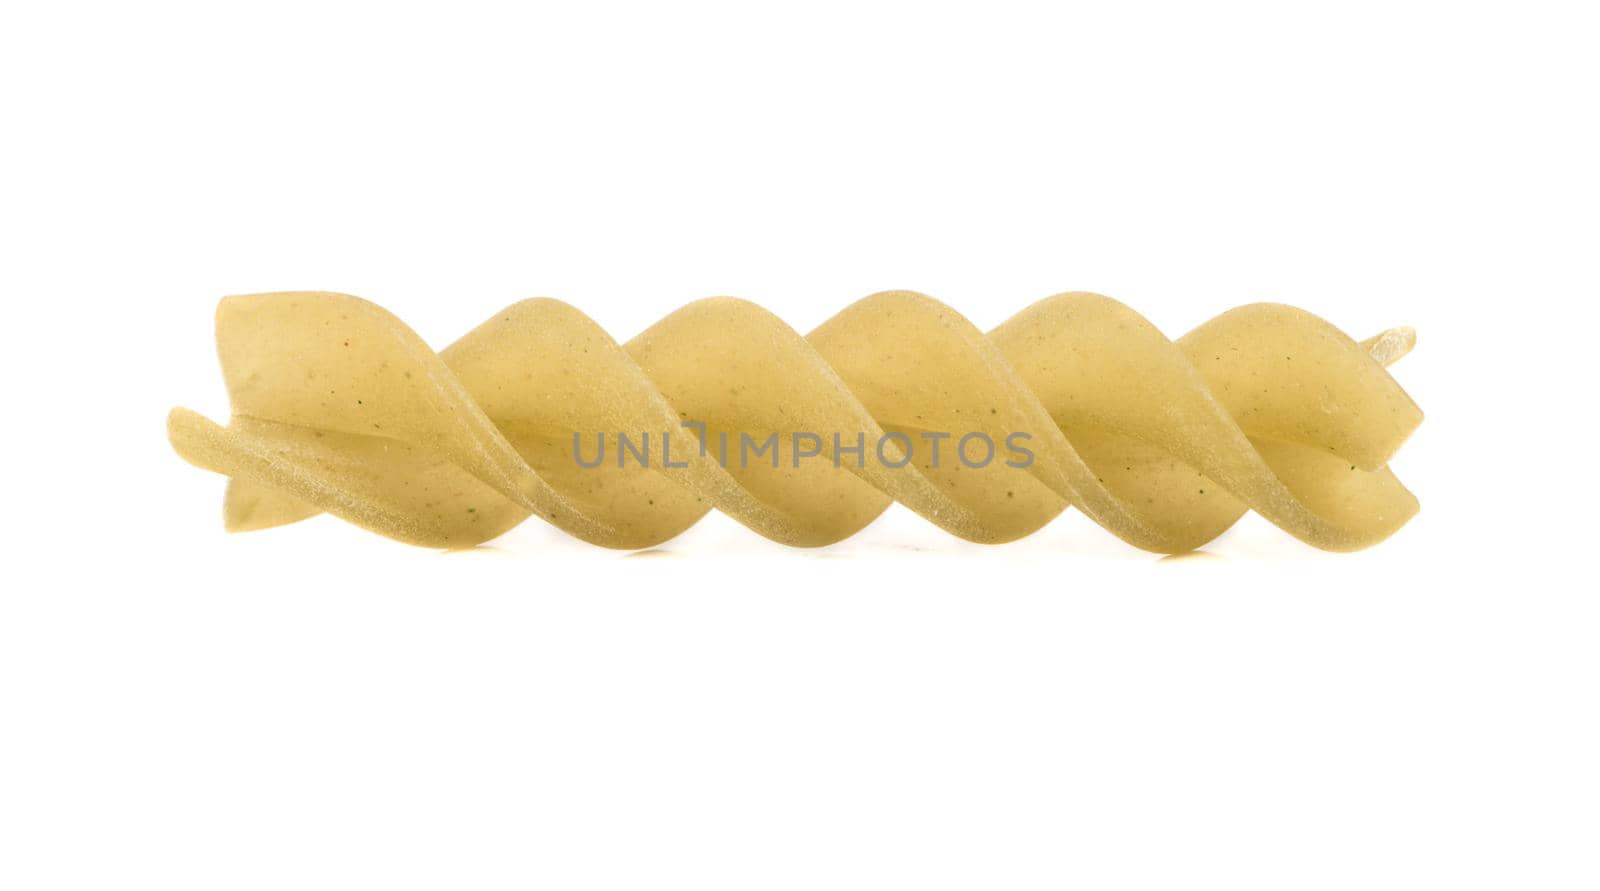 Uncooked pasta fusilli isolated on white background